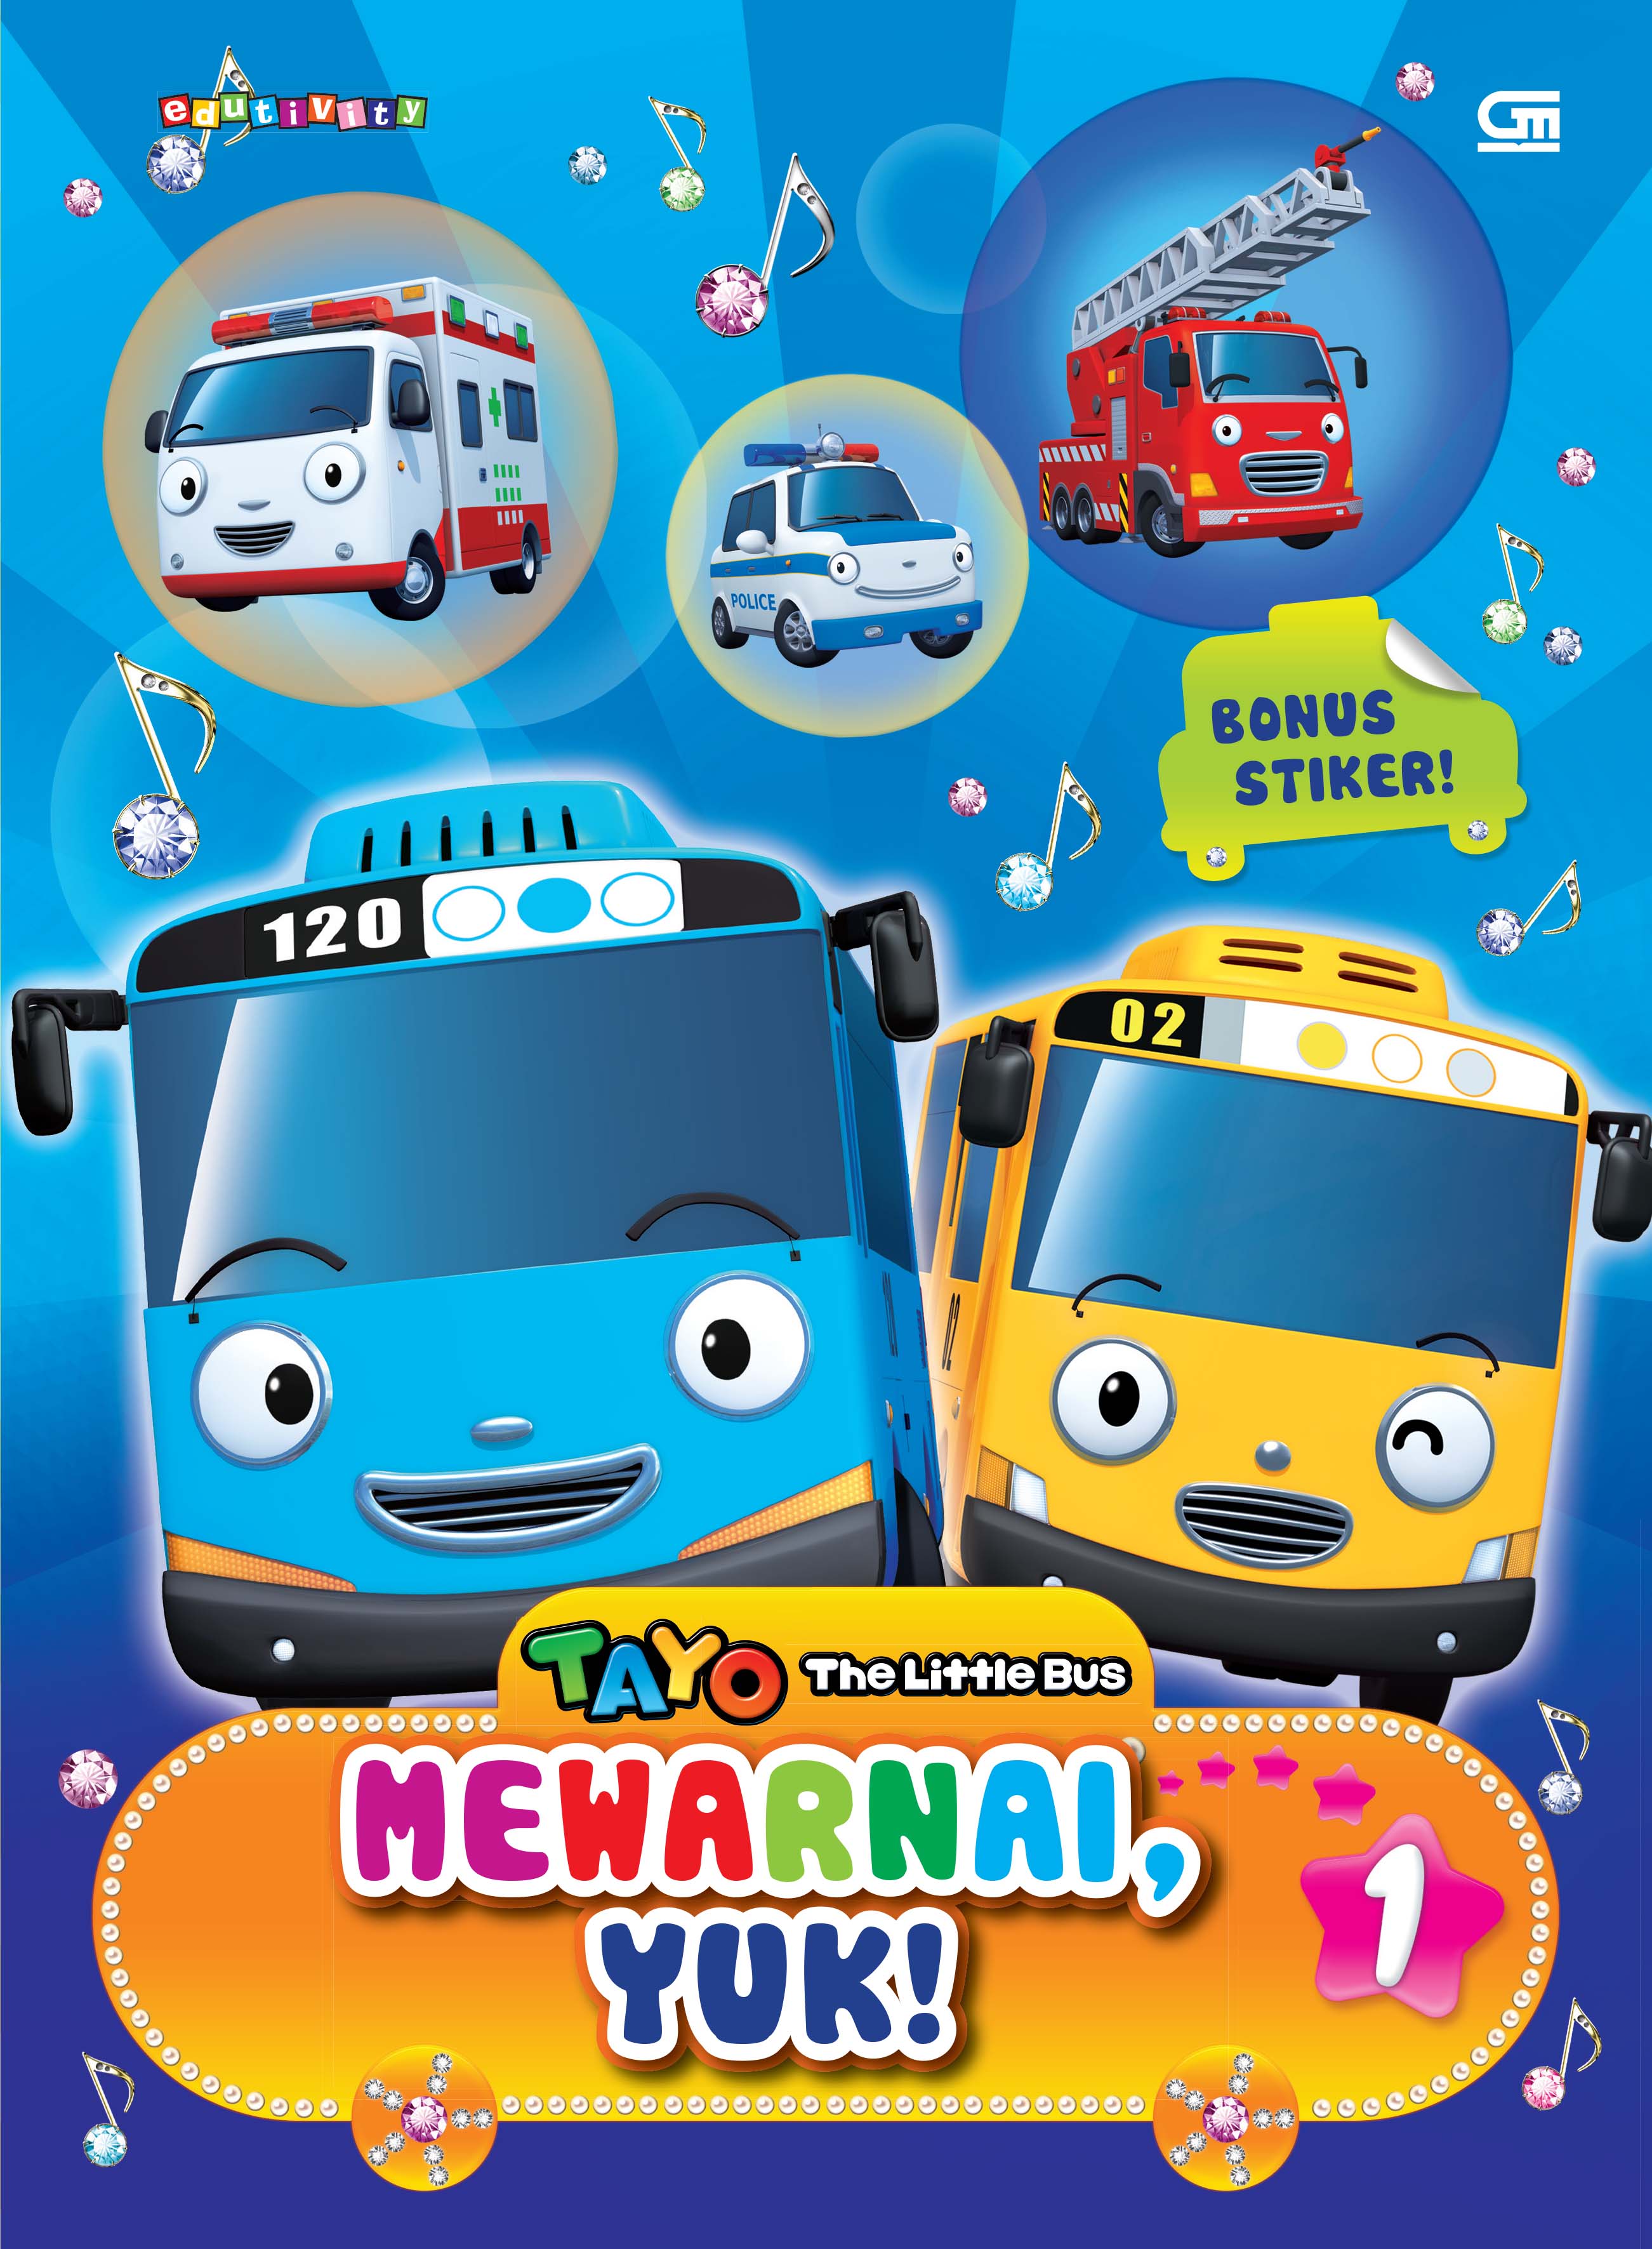 Tayo the Little Bus: Mewarnai, Yuk! 1